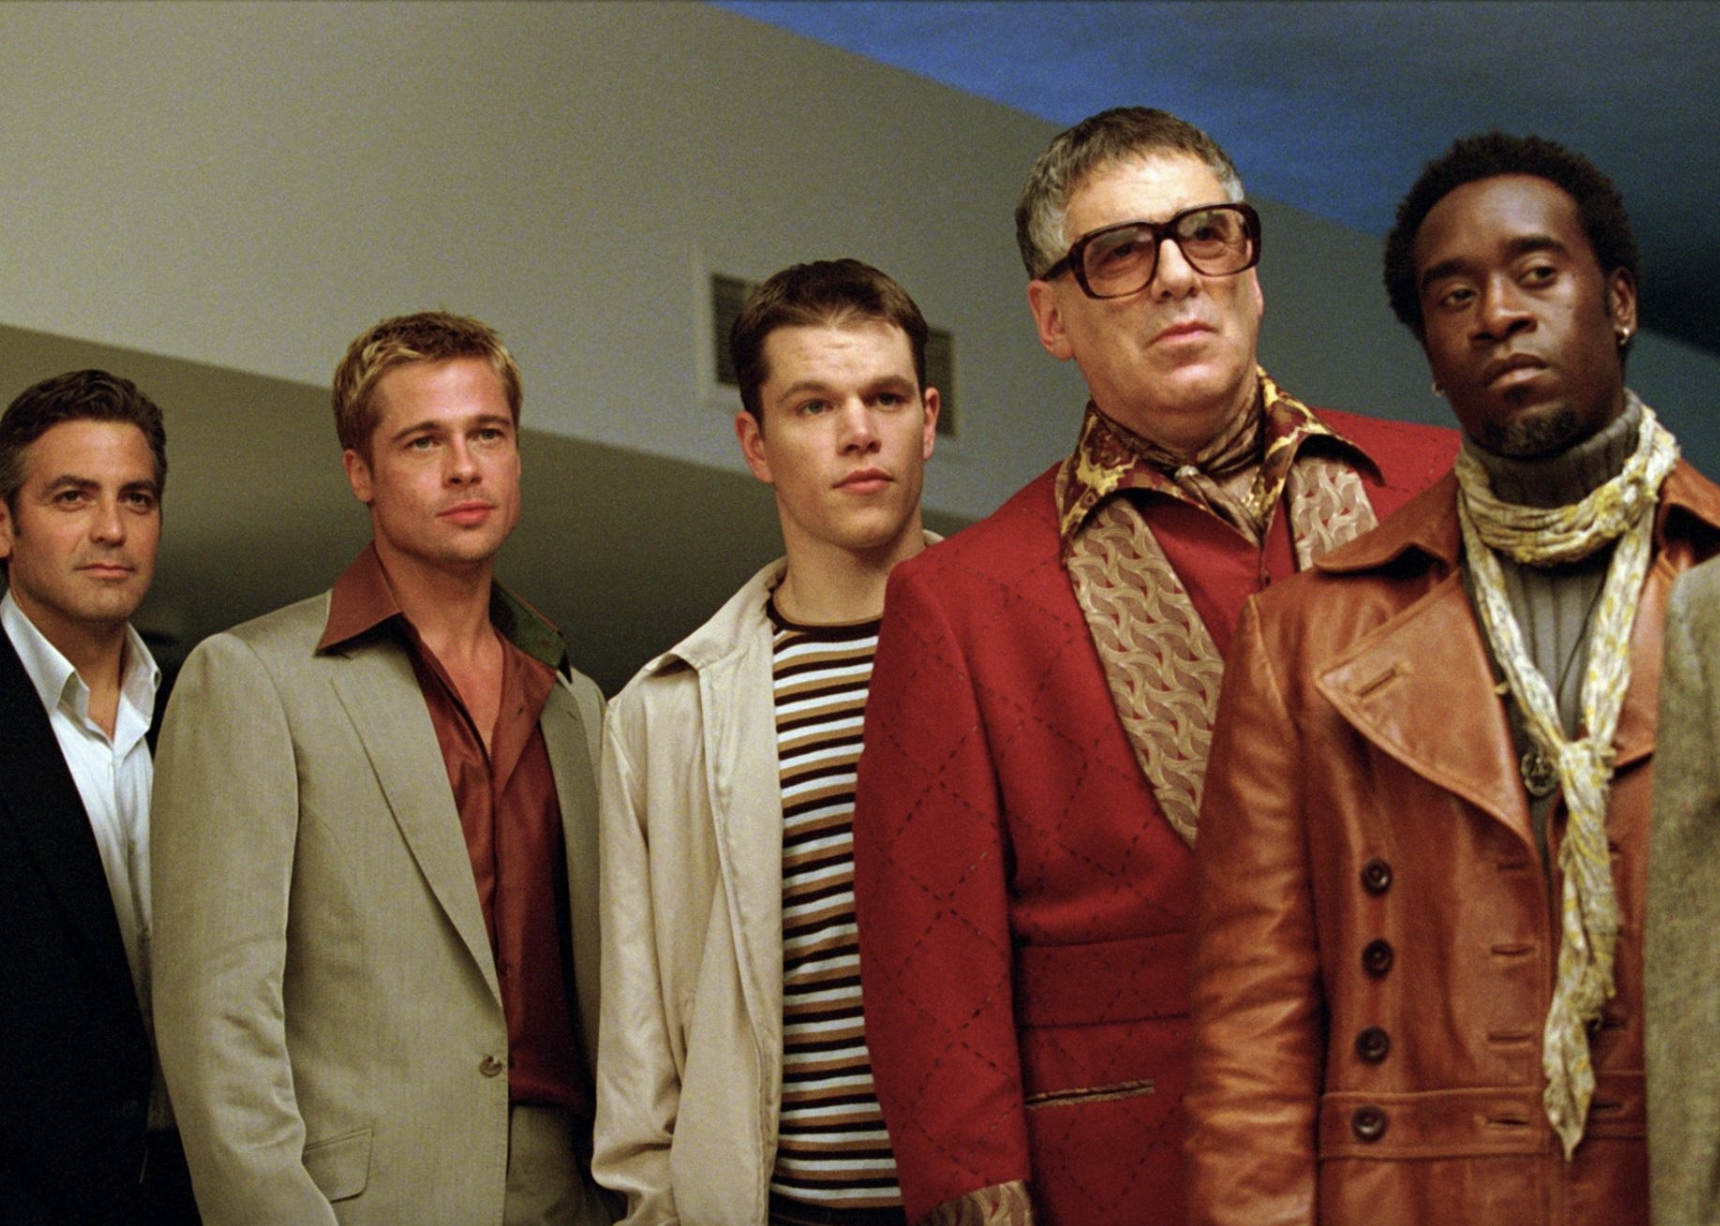 Brad Pitt, George Clooney, Don Cheadle, Matt Damon, and Elliott Gould in "Ocean's Eleven"